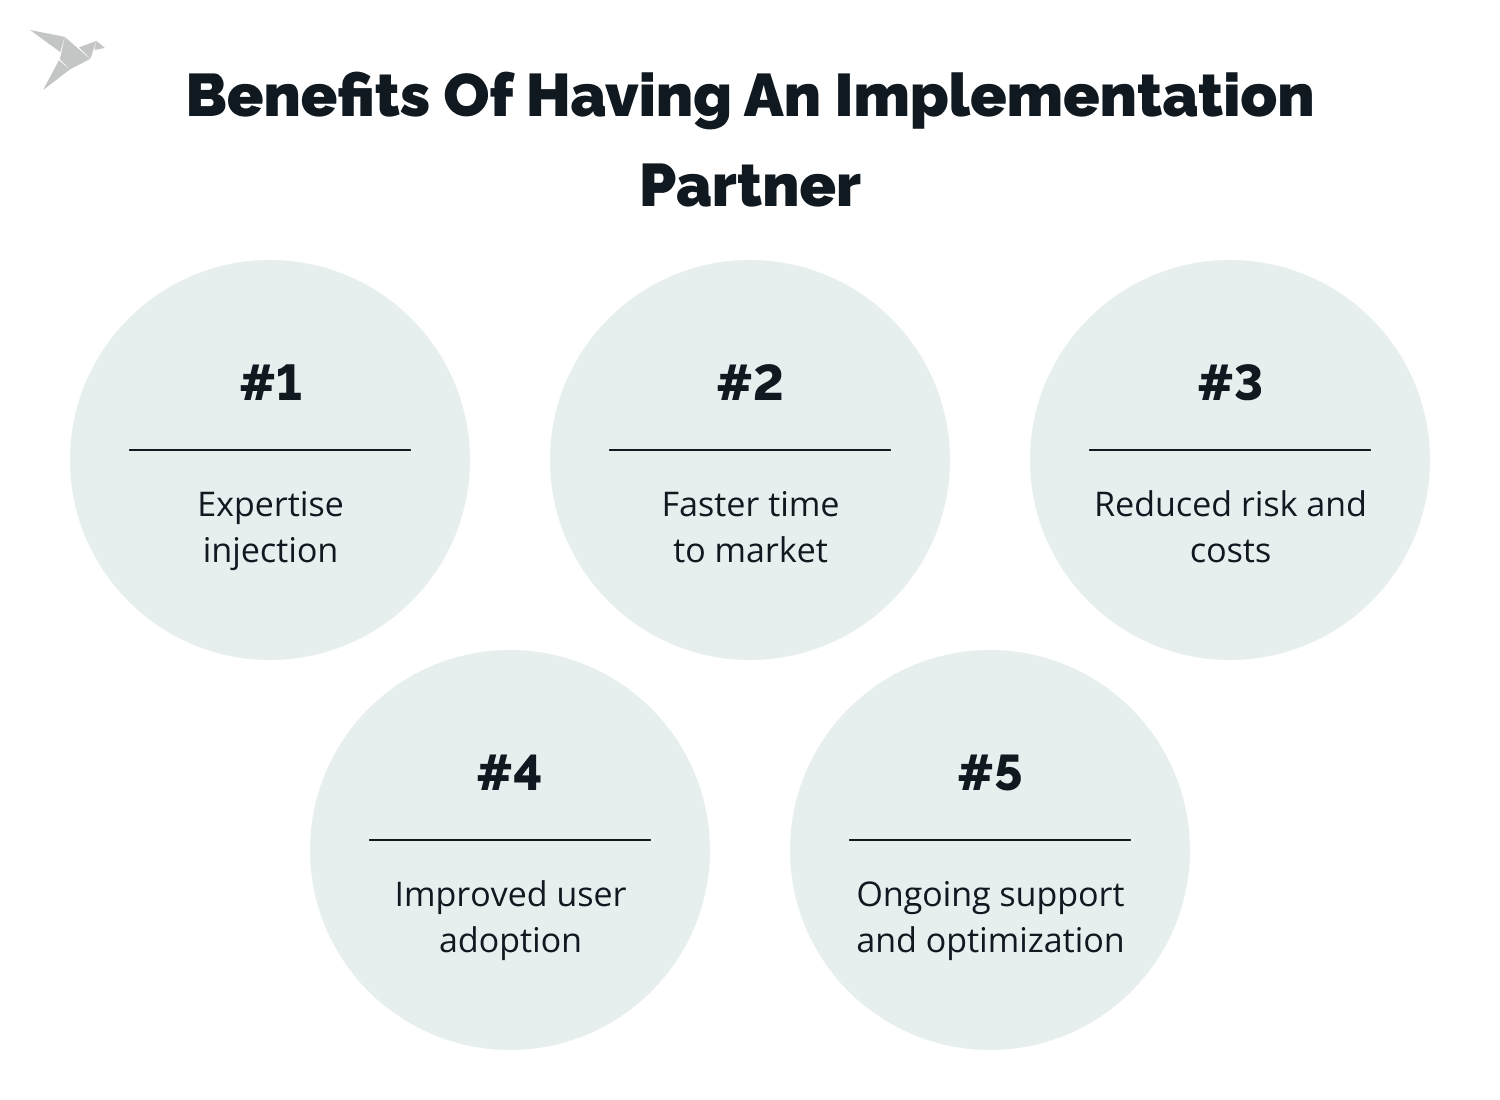 Benefits of Having an Implementation Partner